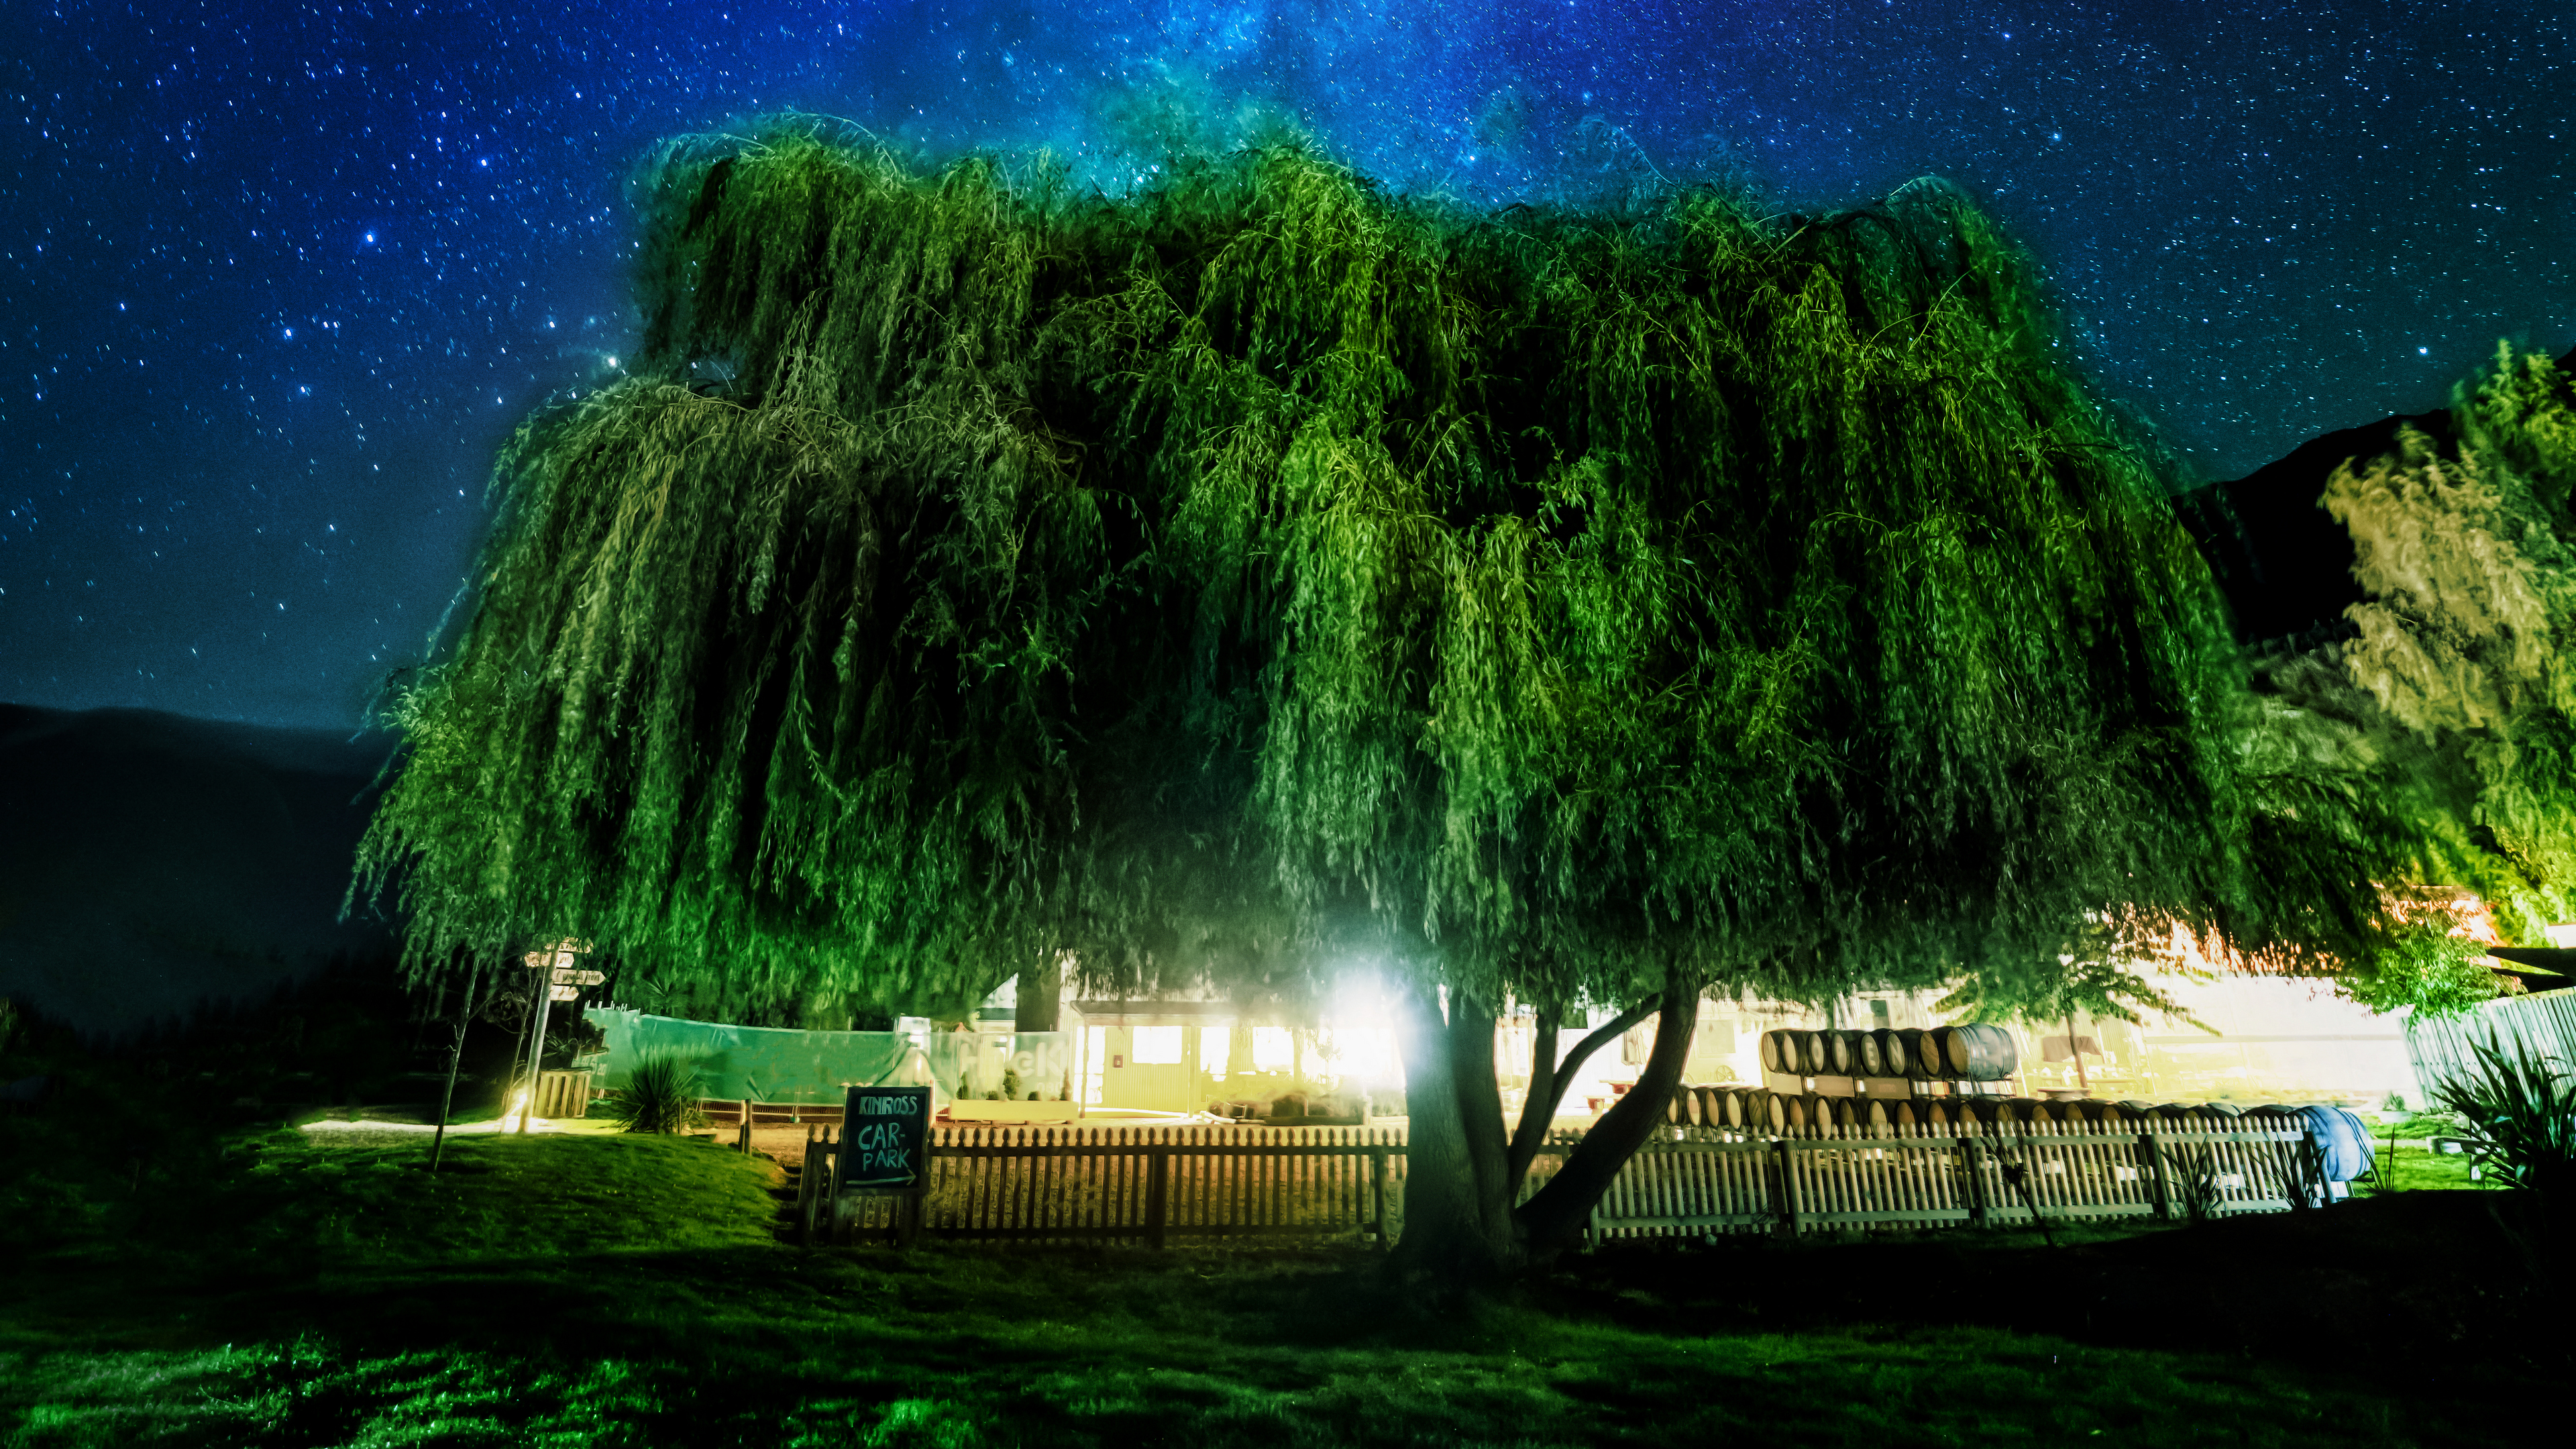 General 3840x2160 landscape New Zealand nature trees sky stars night starry night